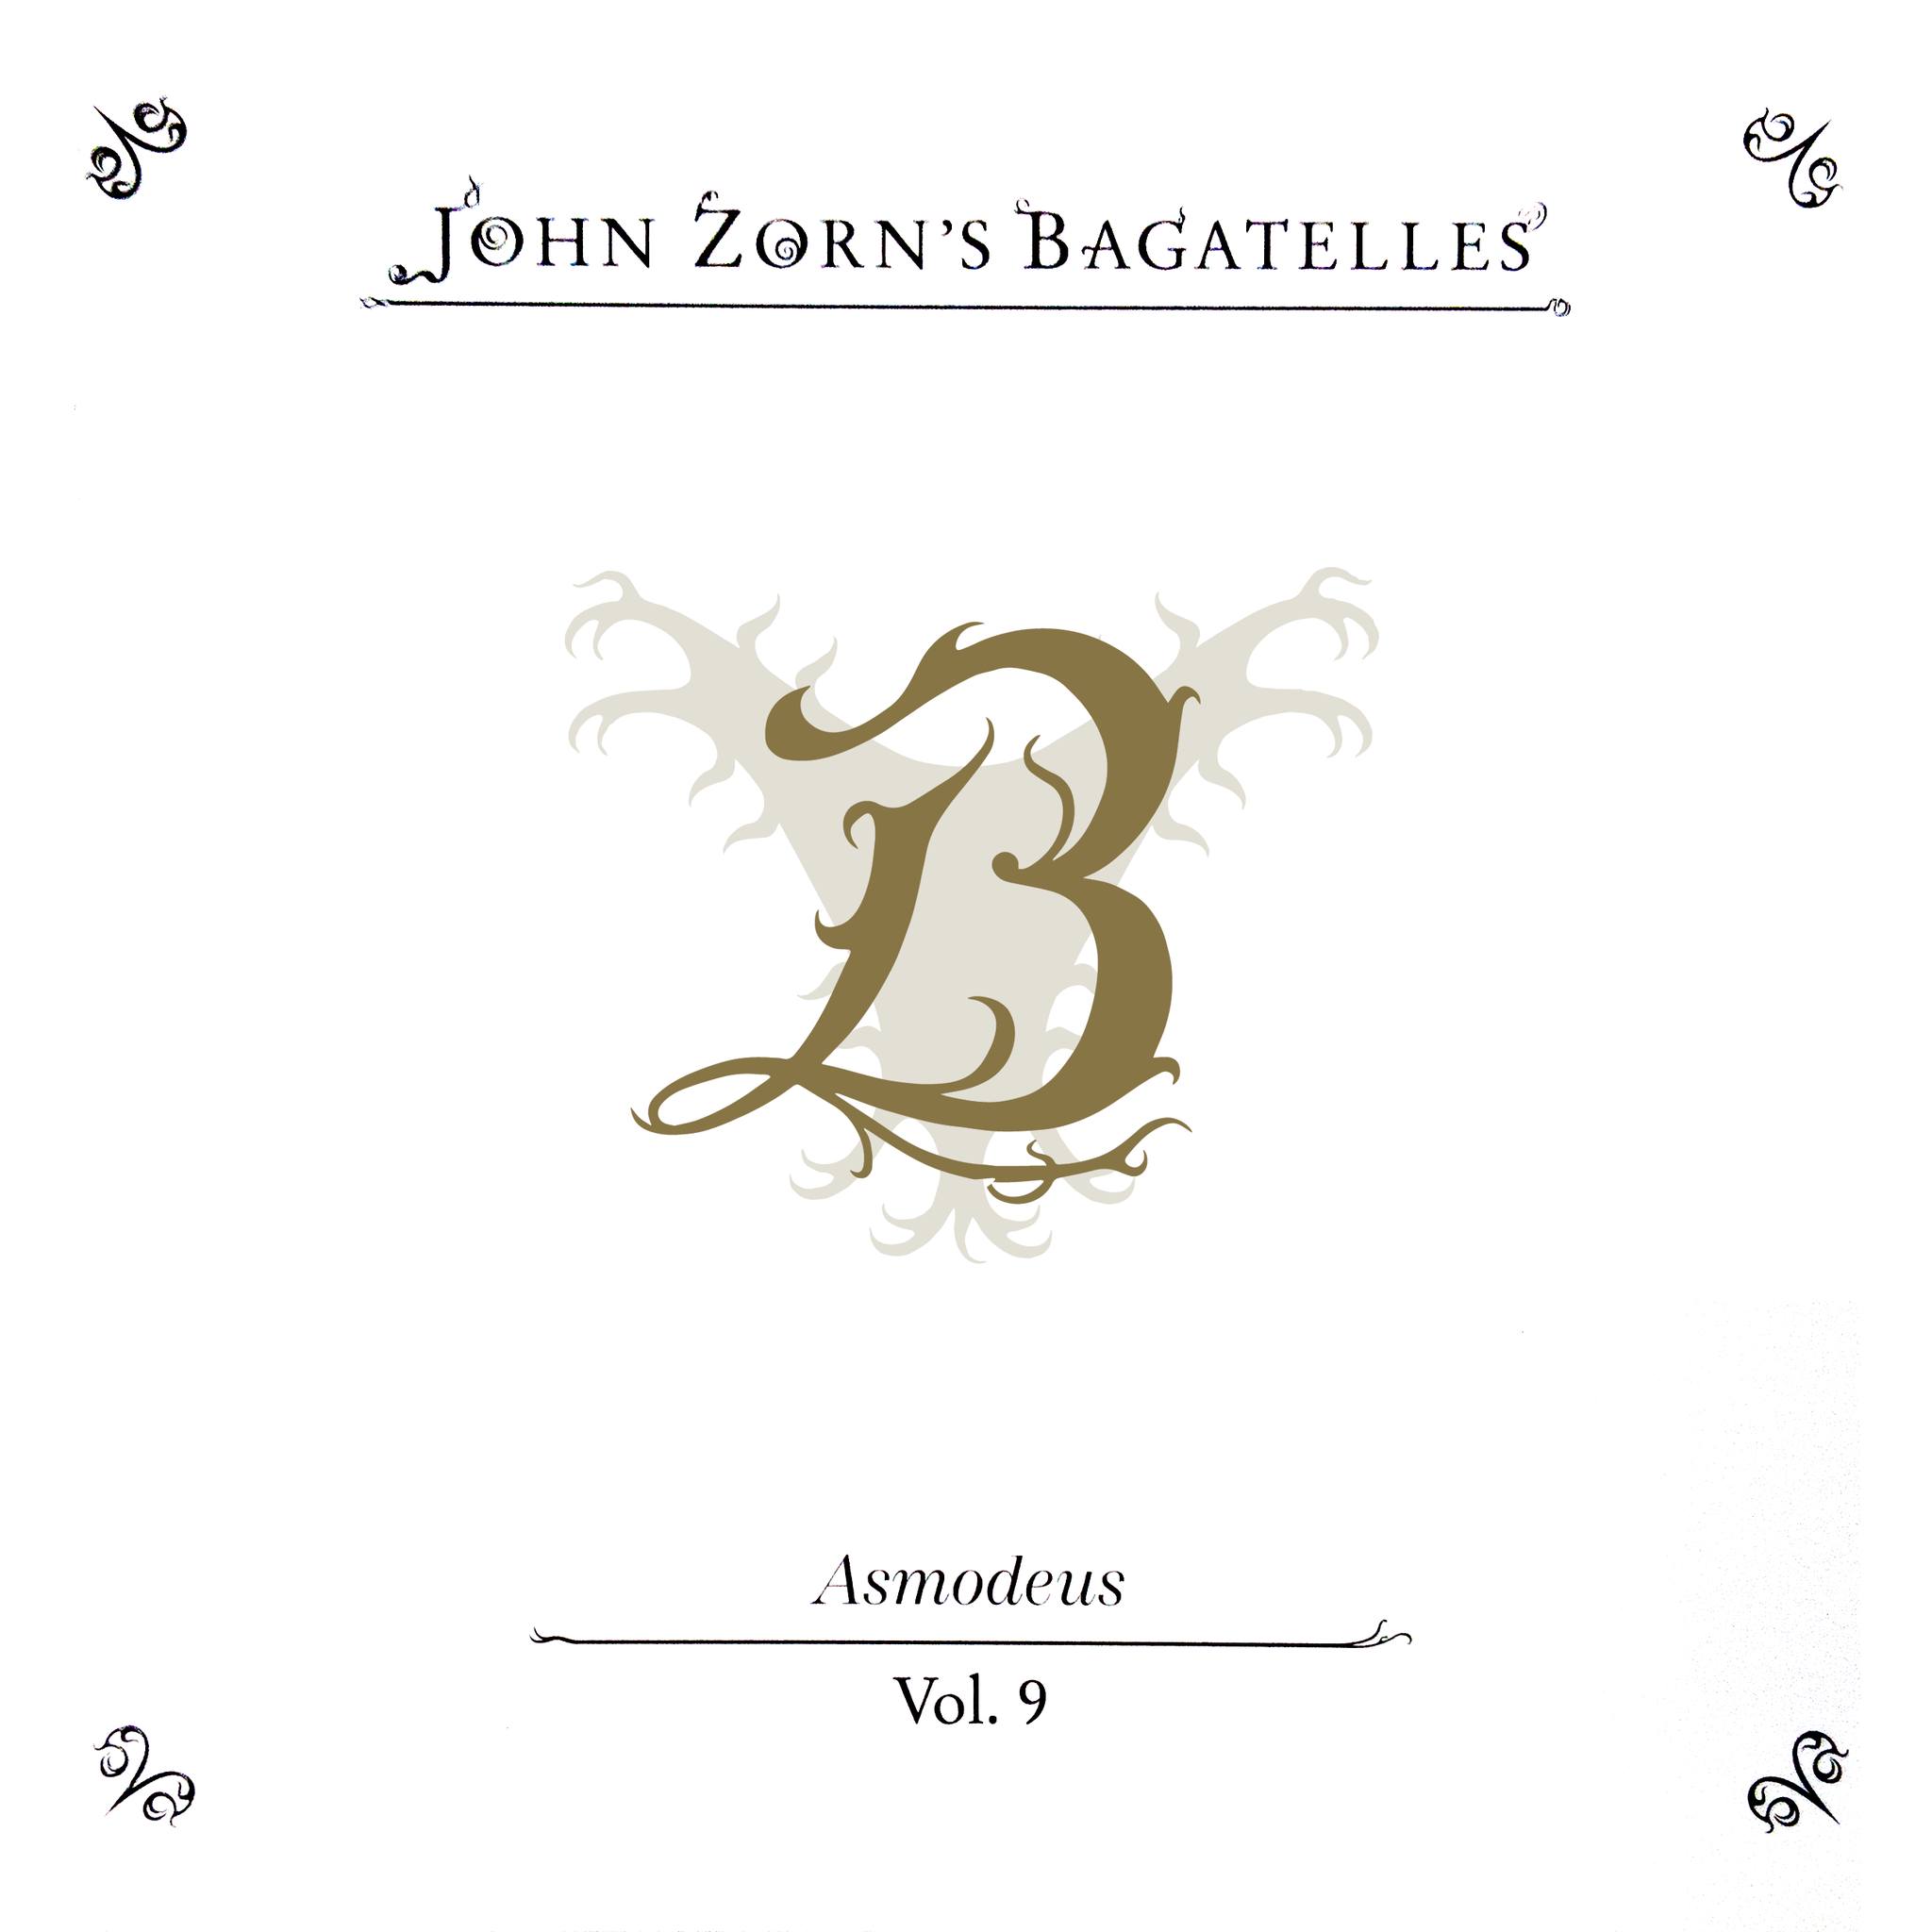 John Zorn ? John Zorn's Bagatelles (Vol. 9)